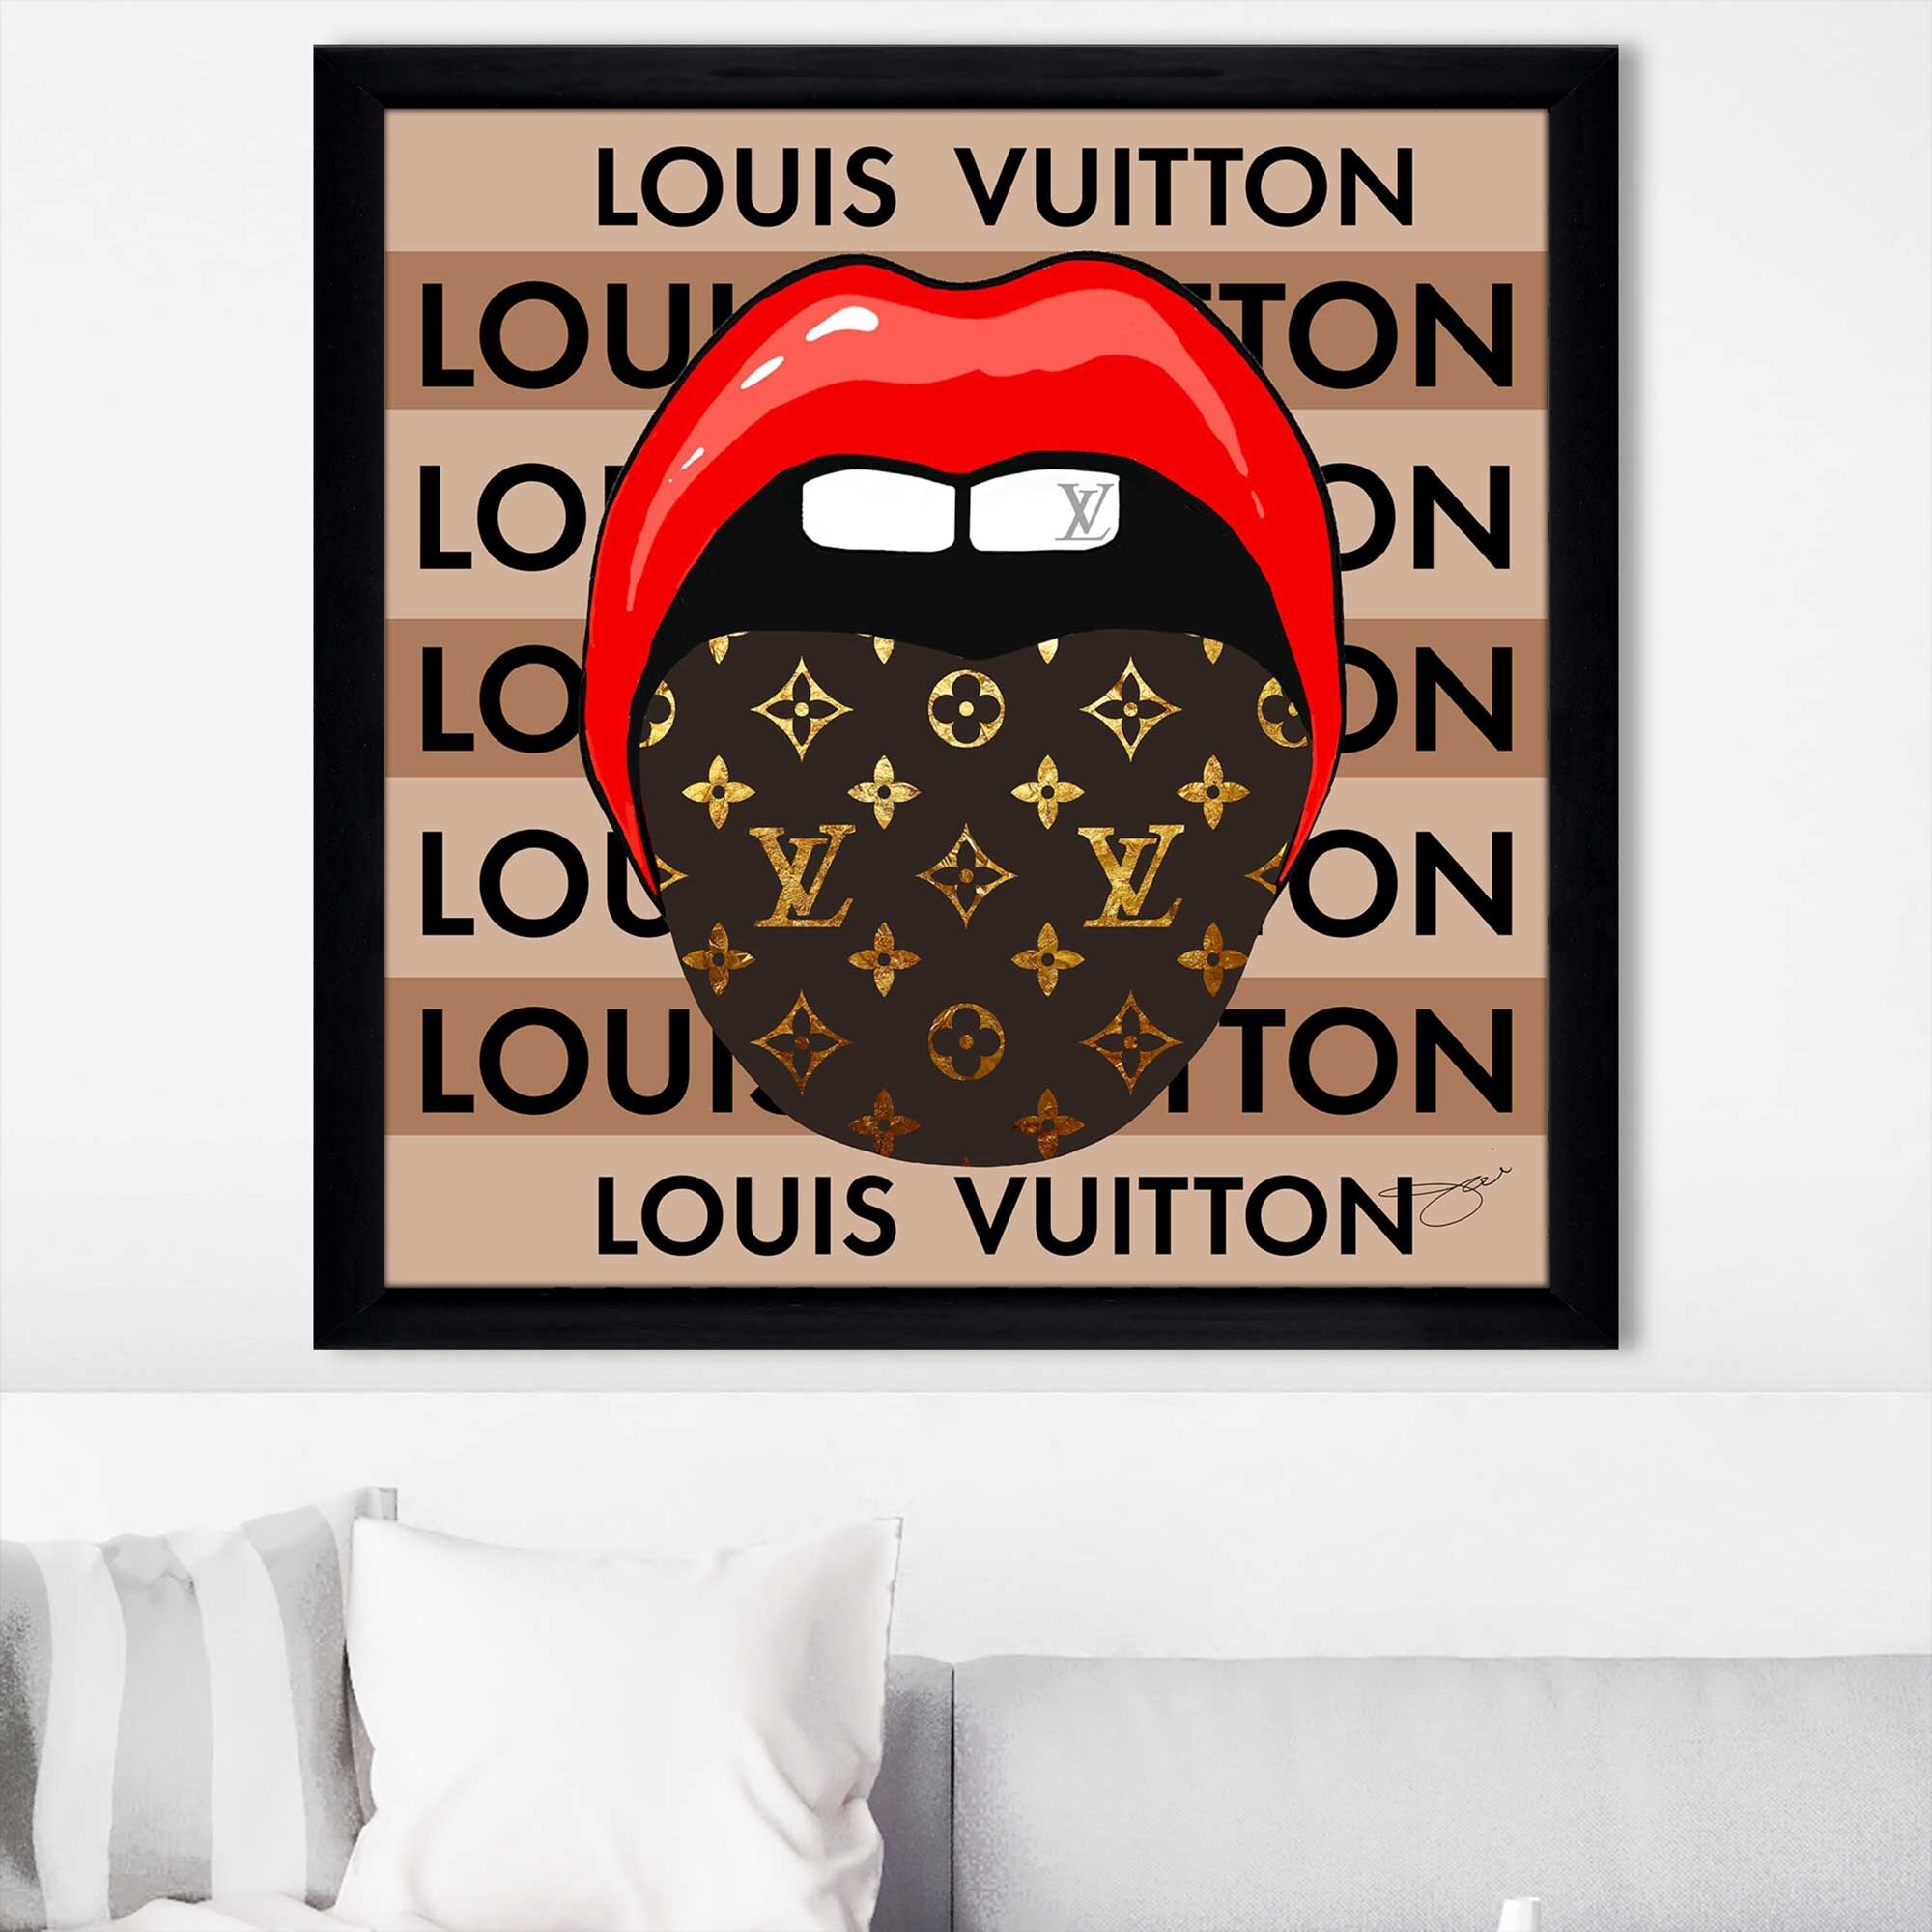 Louis Vuitton Tongue by Jodi Print on Canvas - On Sale - Bed Bath & Beyond  - 35430137